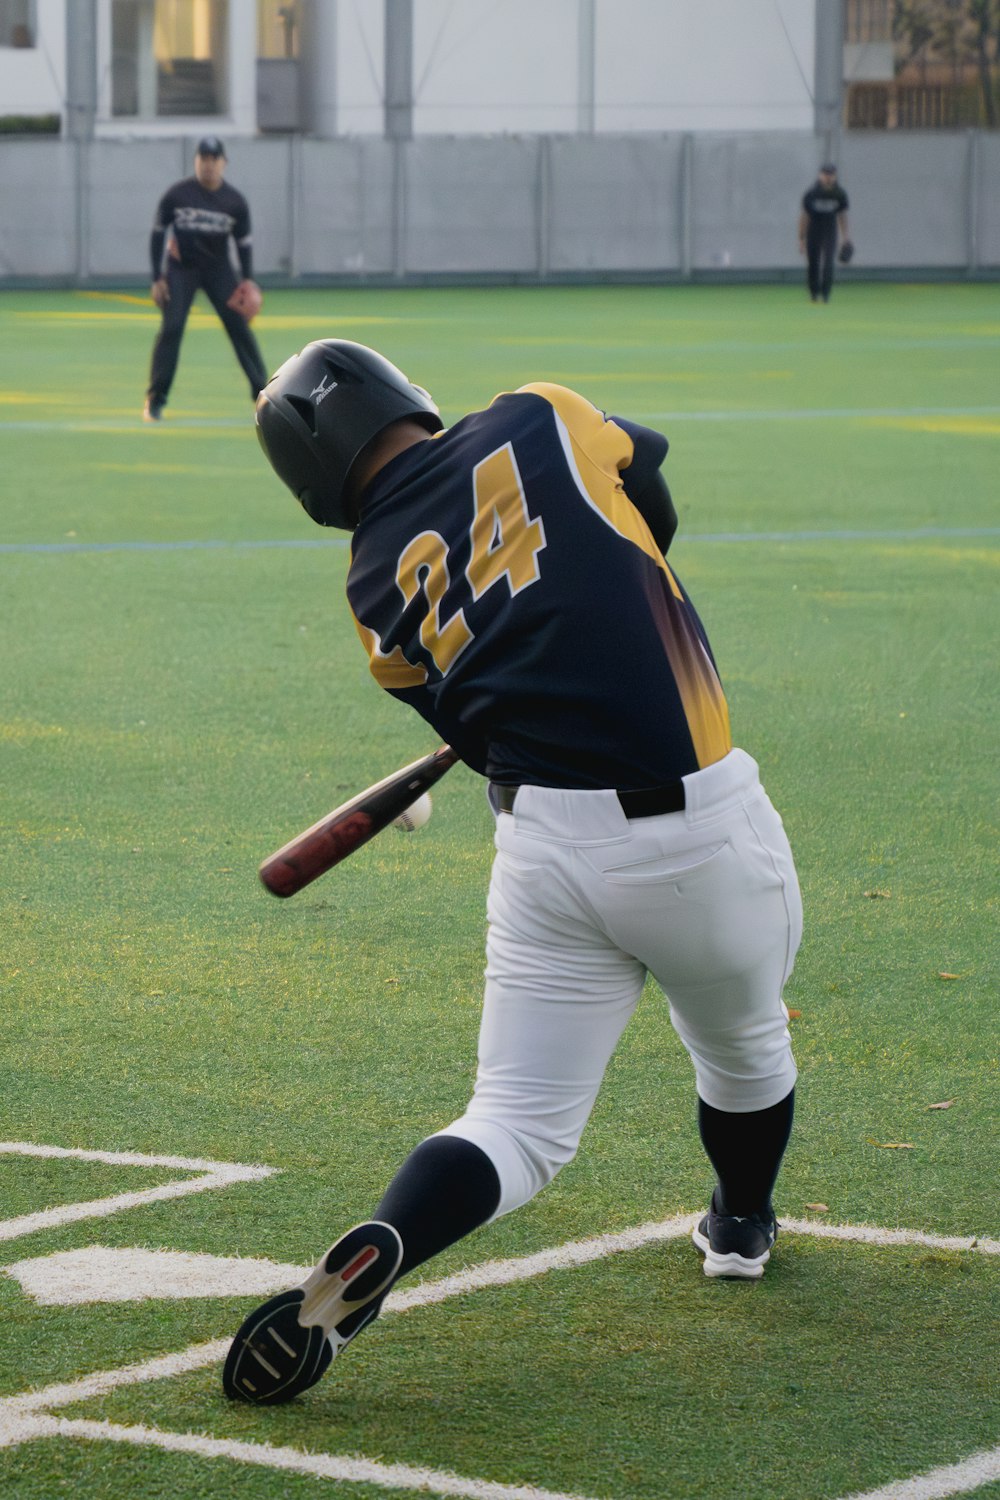 a baseball player swinging a bat on a field